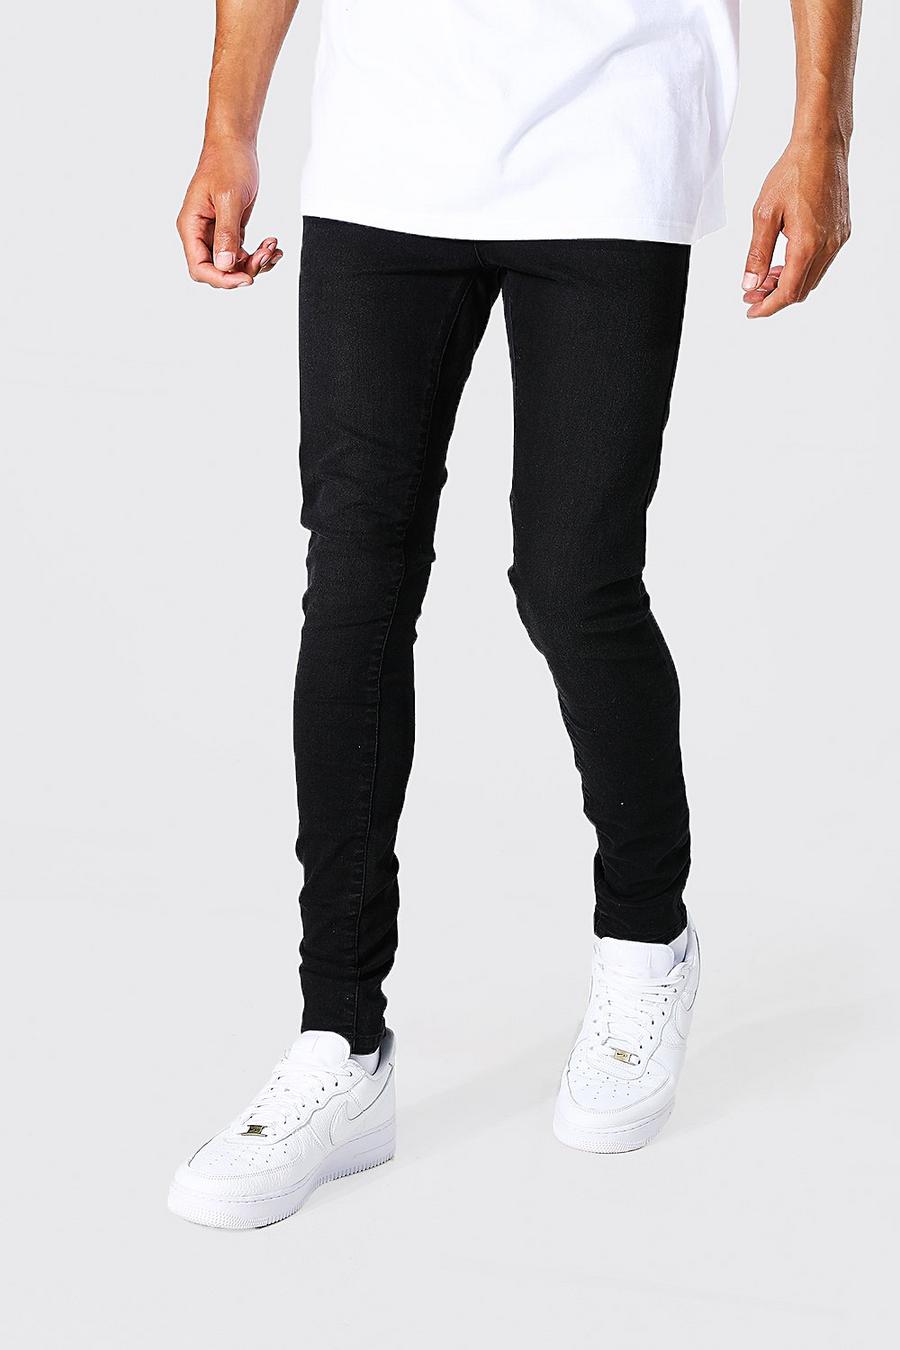 Jeans Tall Super Skinny Fit con cotone riciclato, Washed black